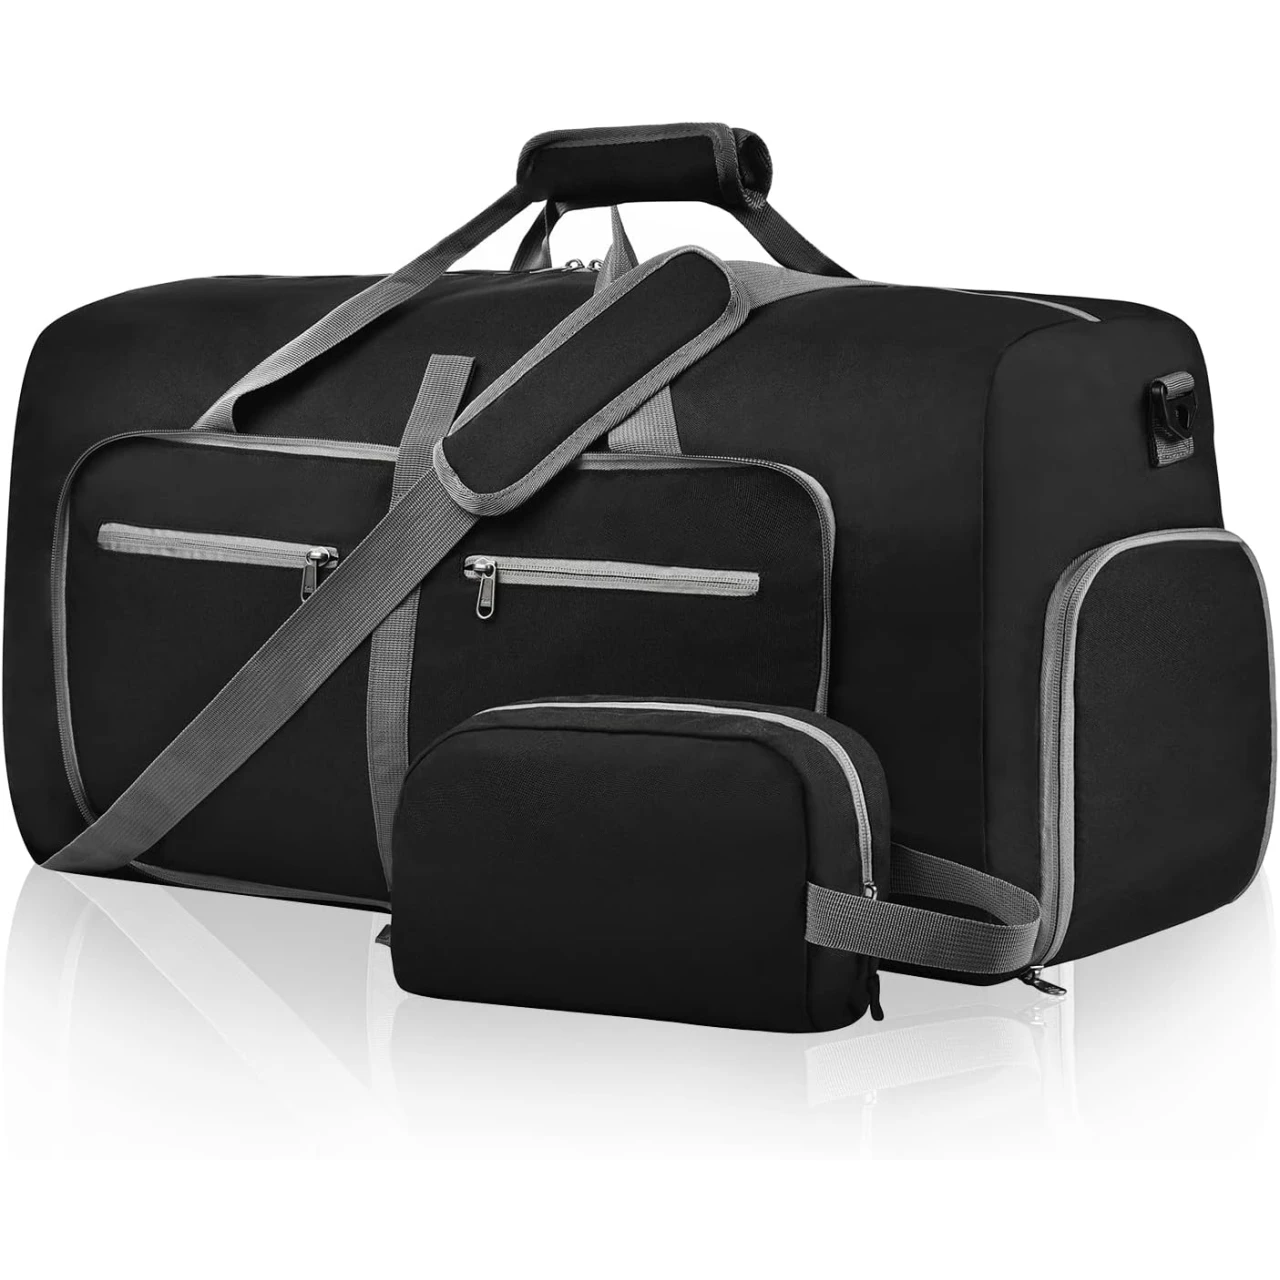 Felipe Varela 65L Duffle Bag with Shoes Compartment and Adjustable Strap, Foldable Travel Duffel Bags for Men Women, Waterproof Duffel Bags